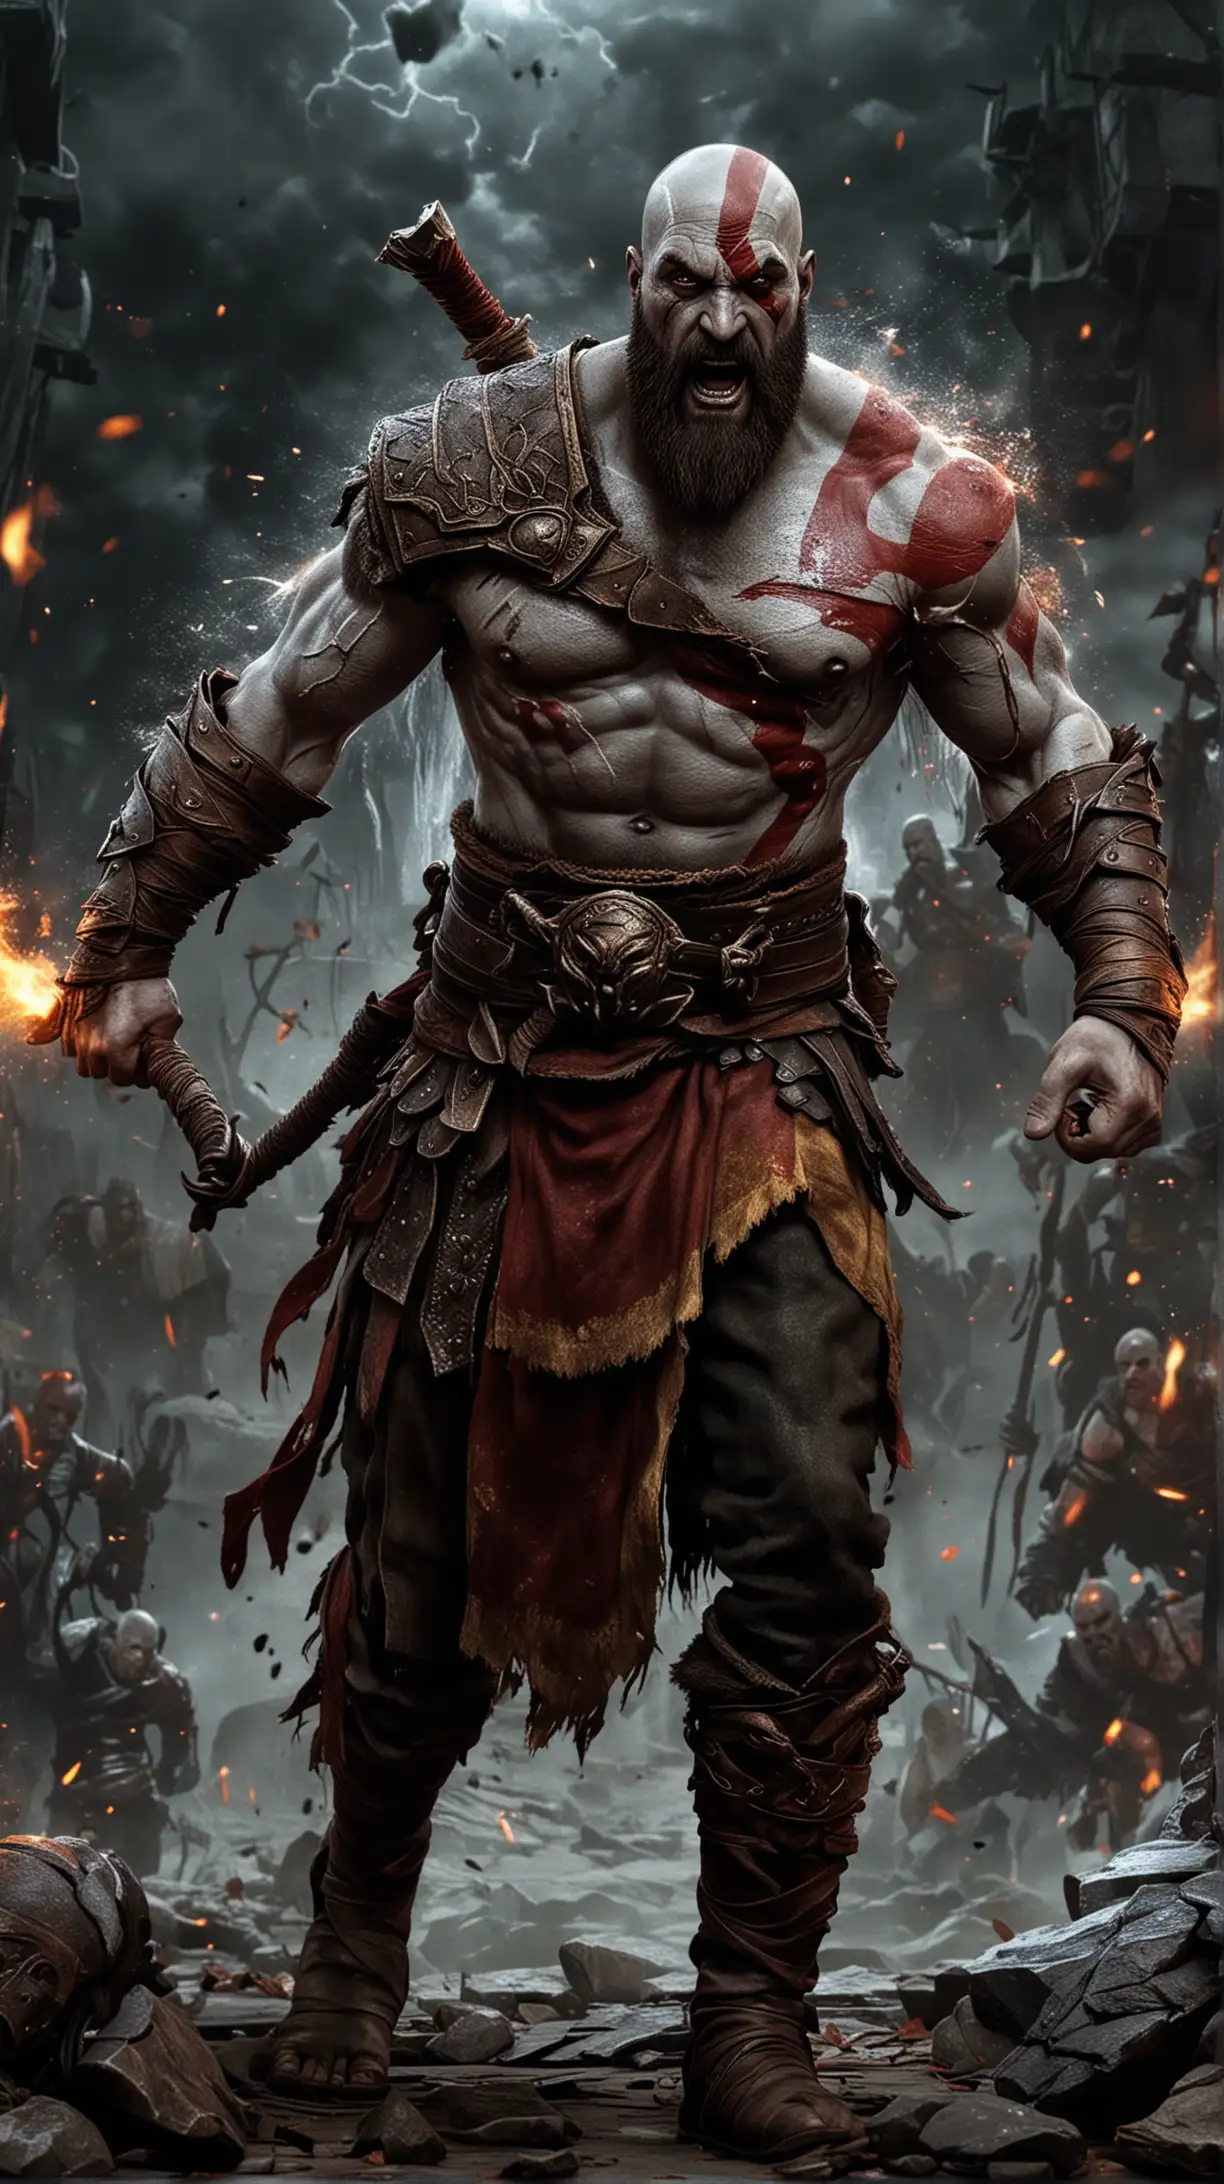 kratos, in battle, dramatic lighting, extreme detailed digital art